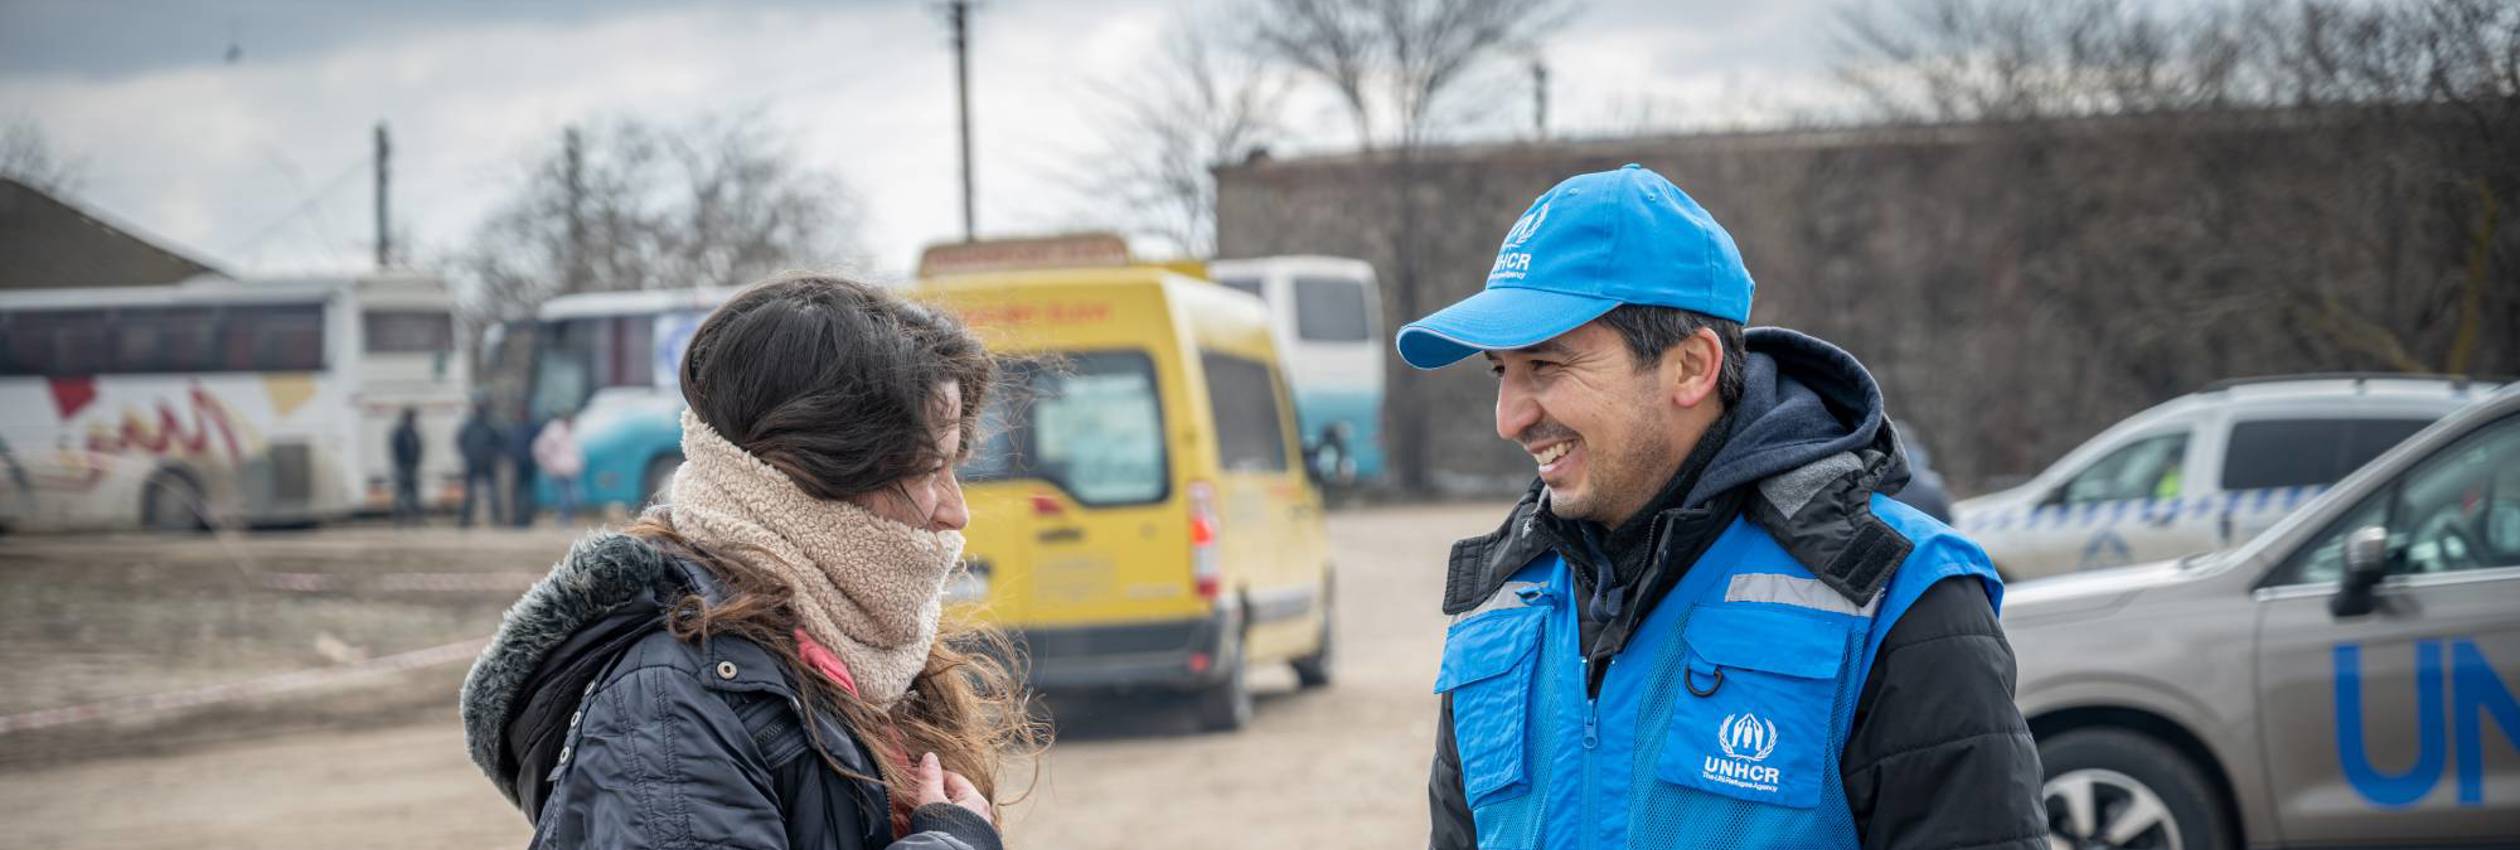 UNHCR’s Representative in Romania, Batyr Sapbyiev, assists a refugee at the Palanca border crossing in Moldova.